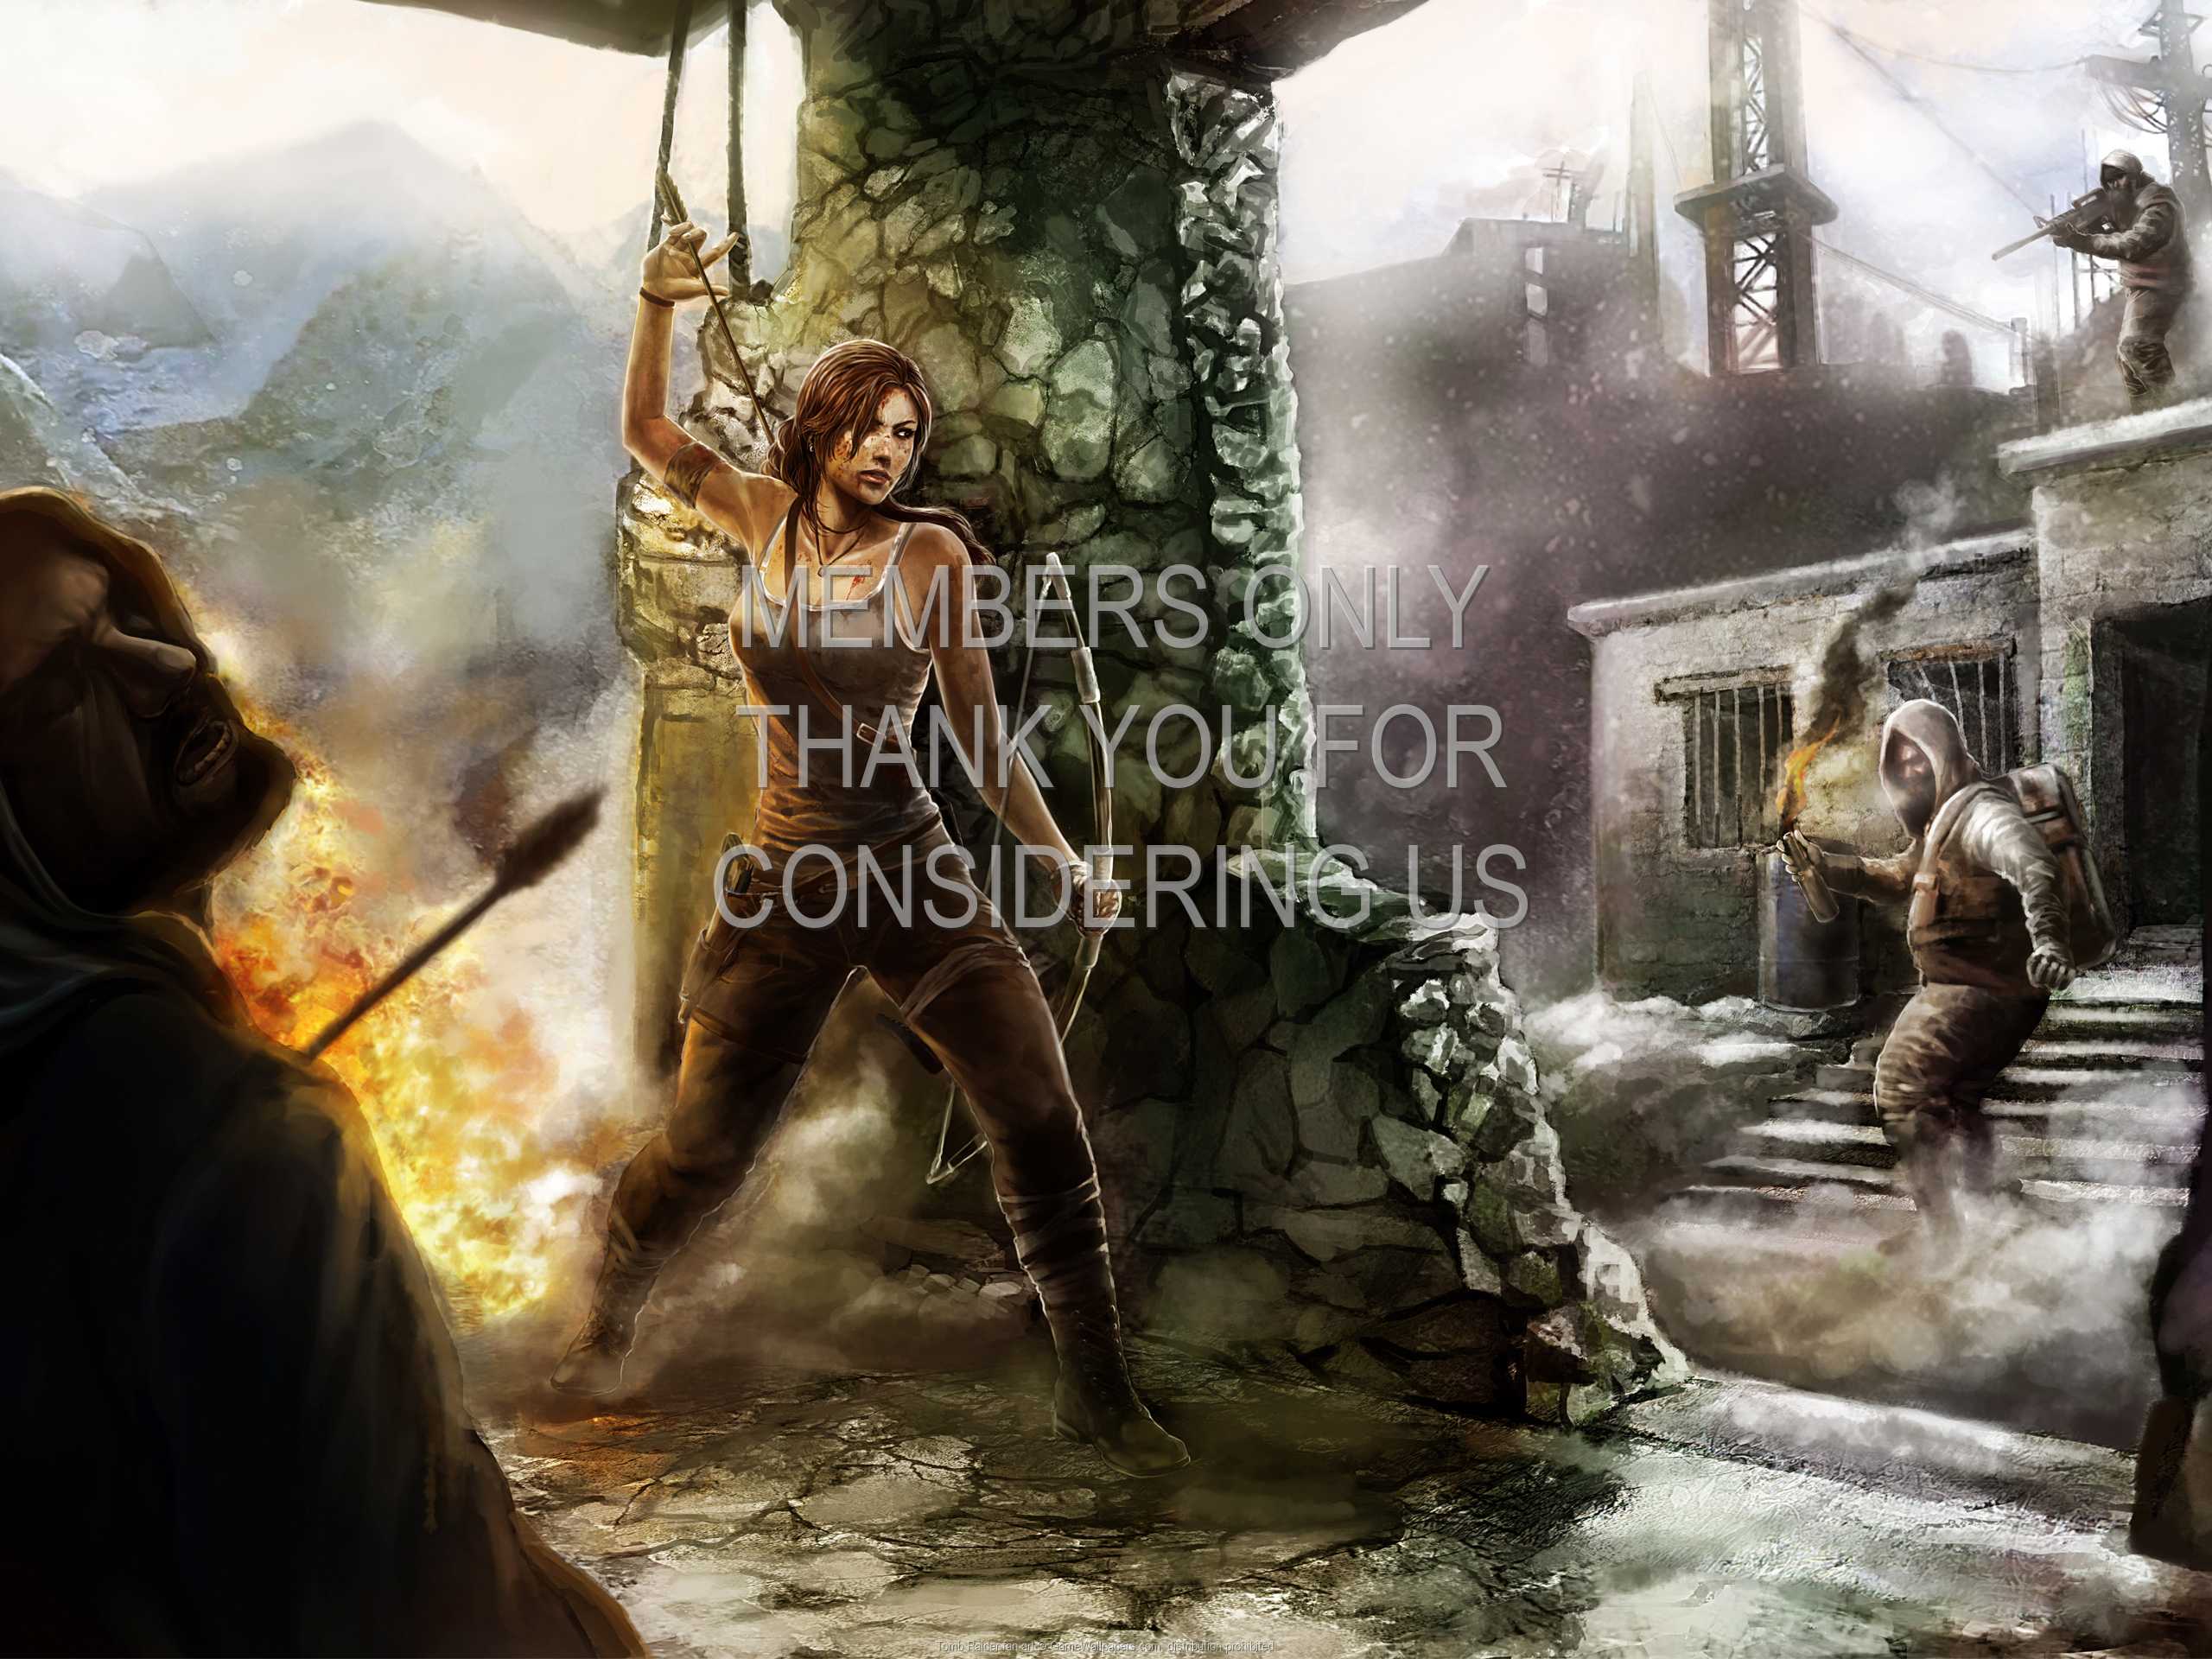 Tomb Raider fan art 1080p%20Horizontal Mobile wallpaper or background 02